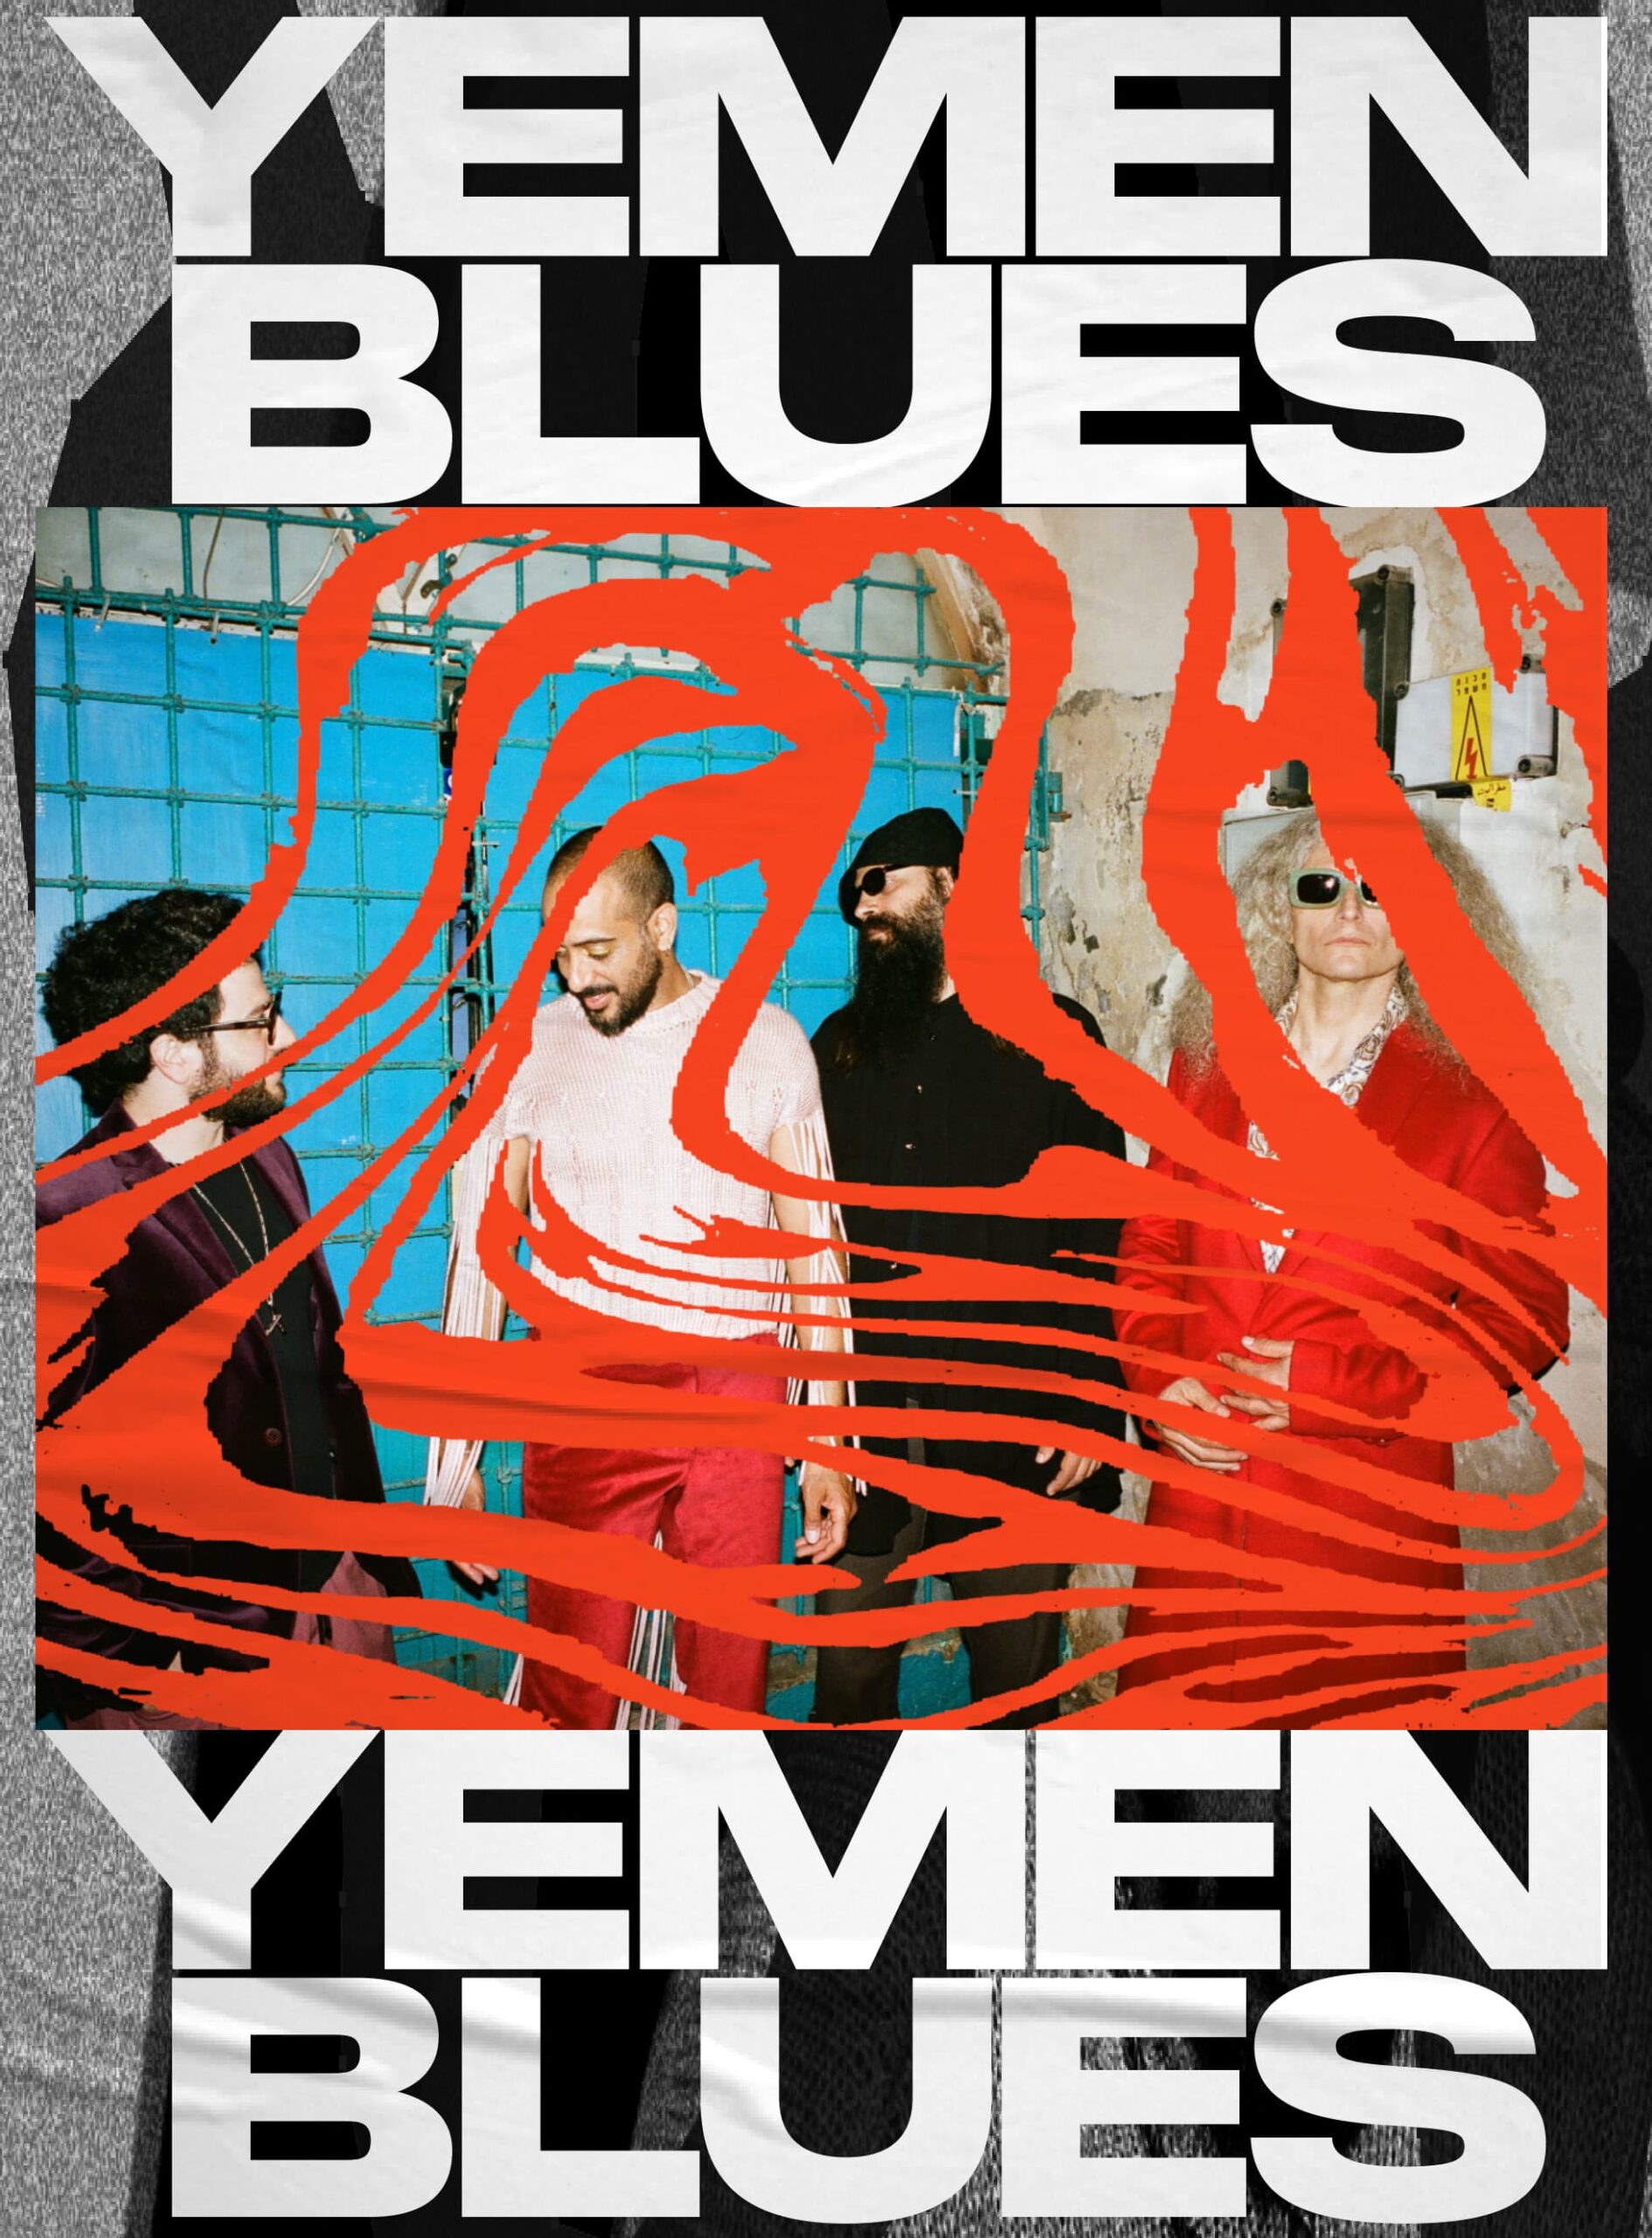 yemen blues tour dates